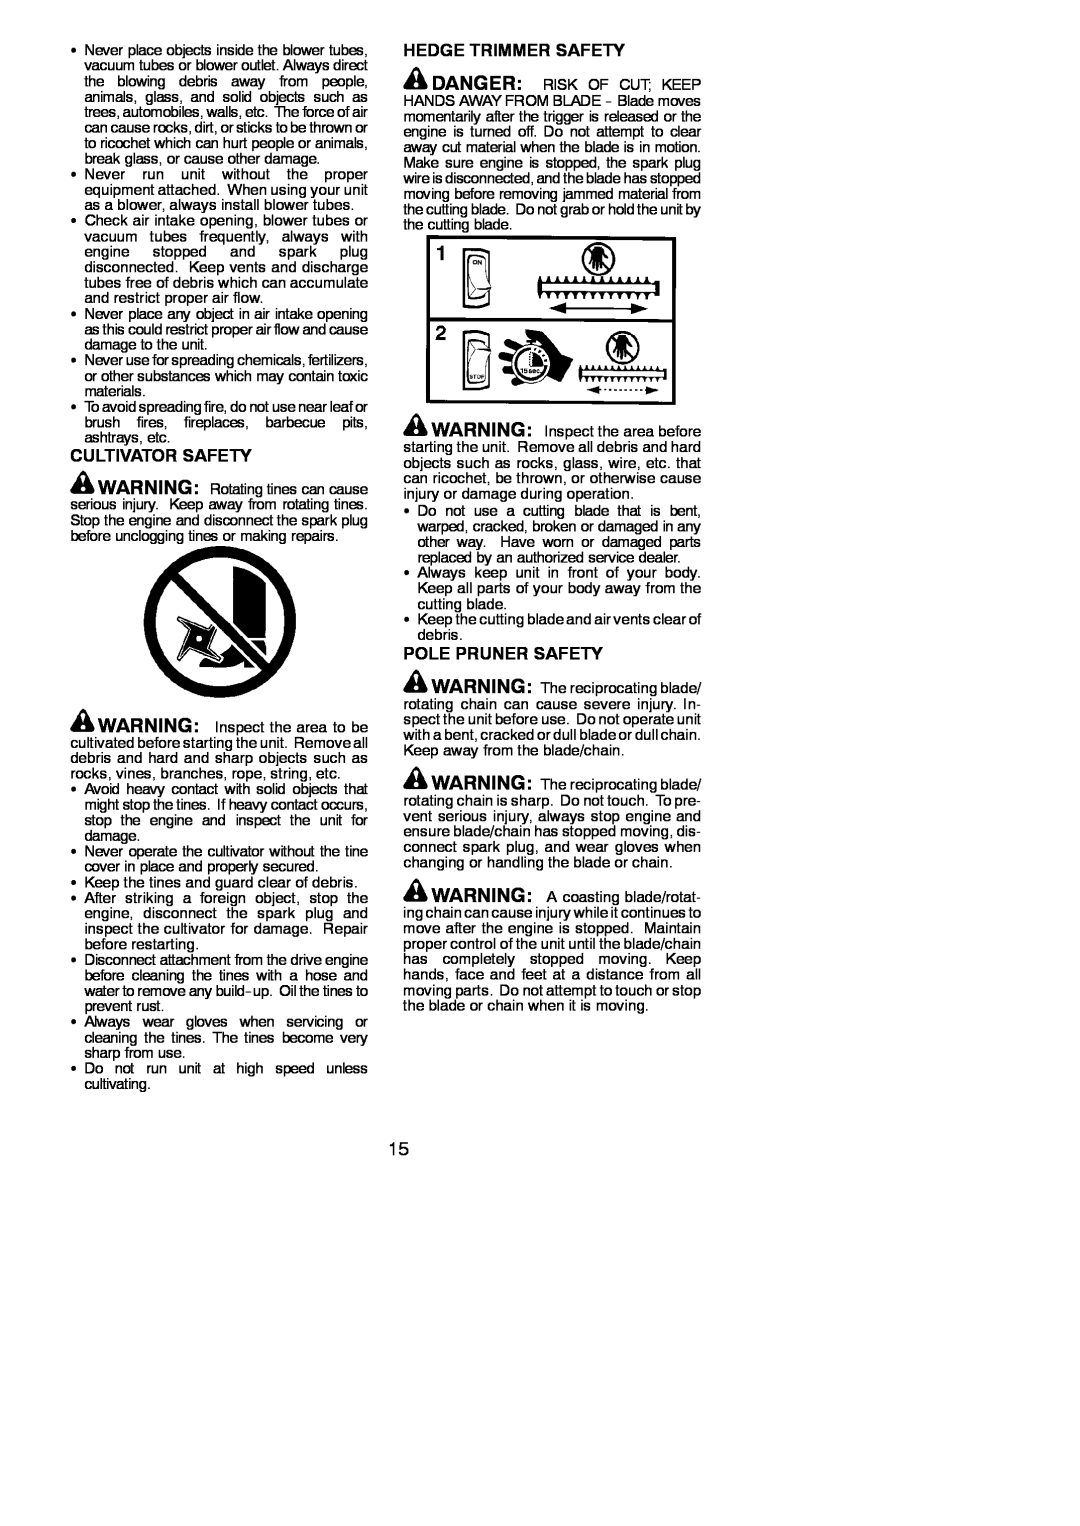 Poulan 545186843 instruction manual Cultivator Safety, Hedge Trimmer Safety, Pole Pruner Safety 